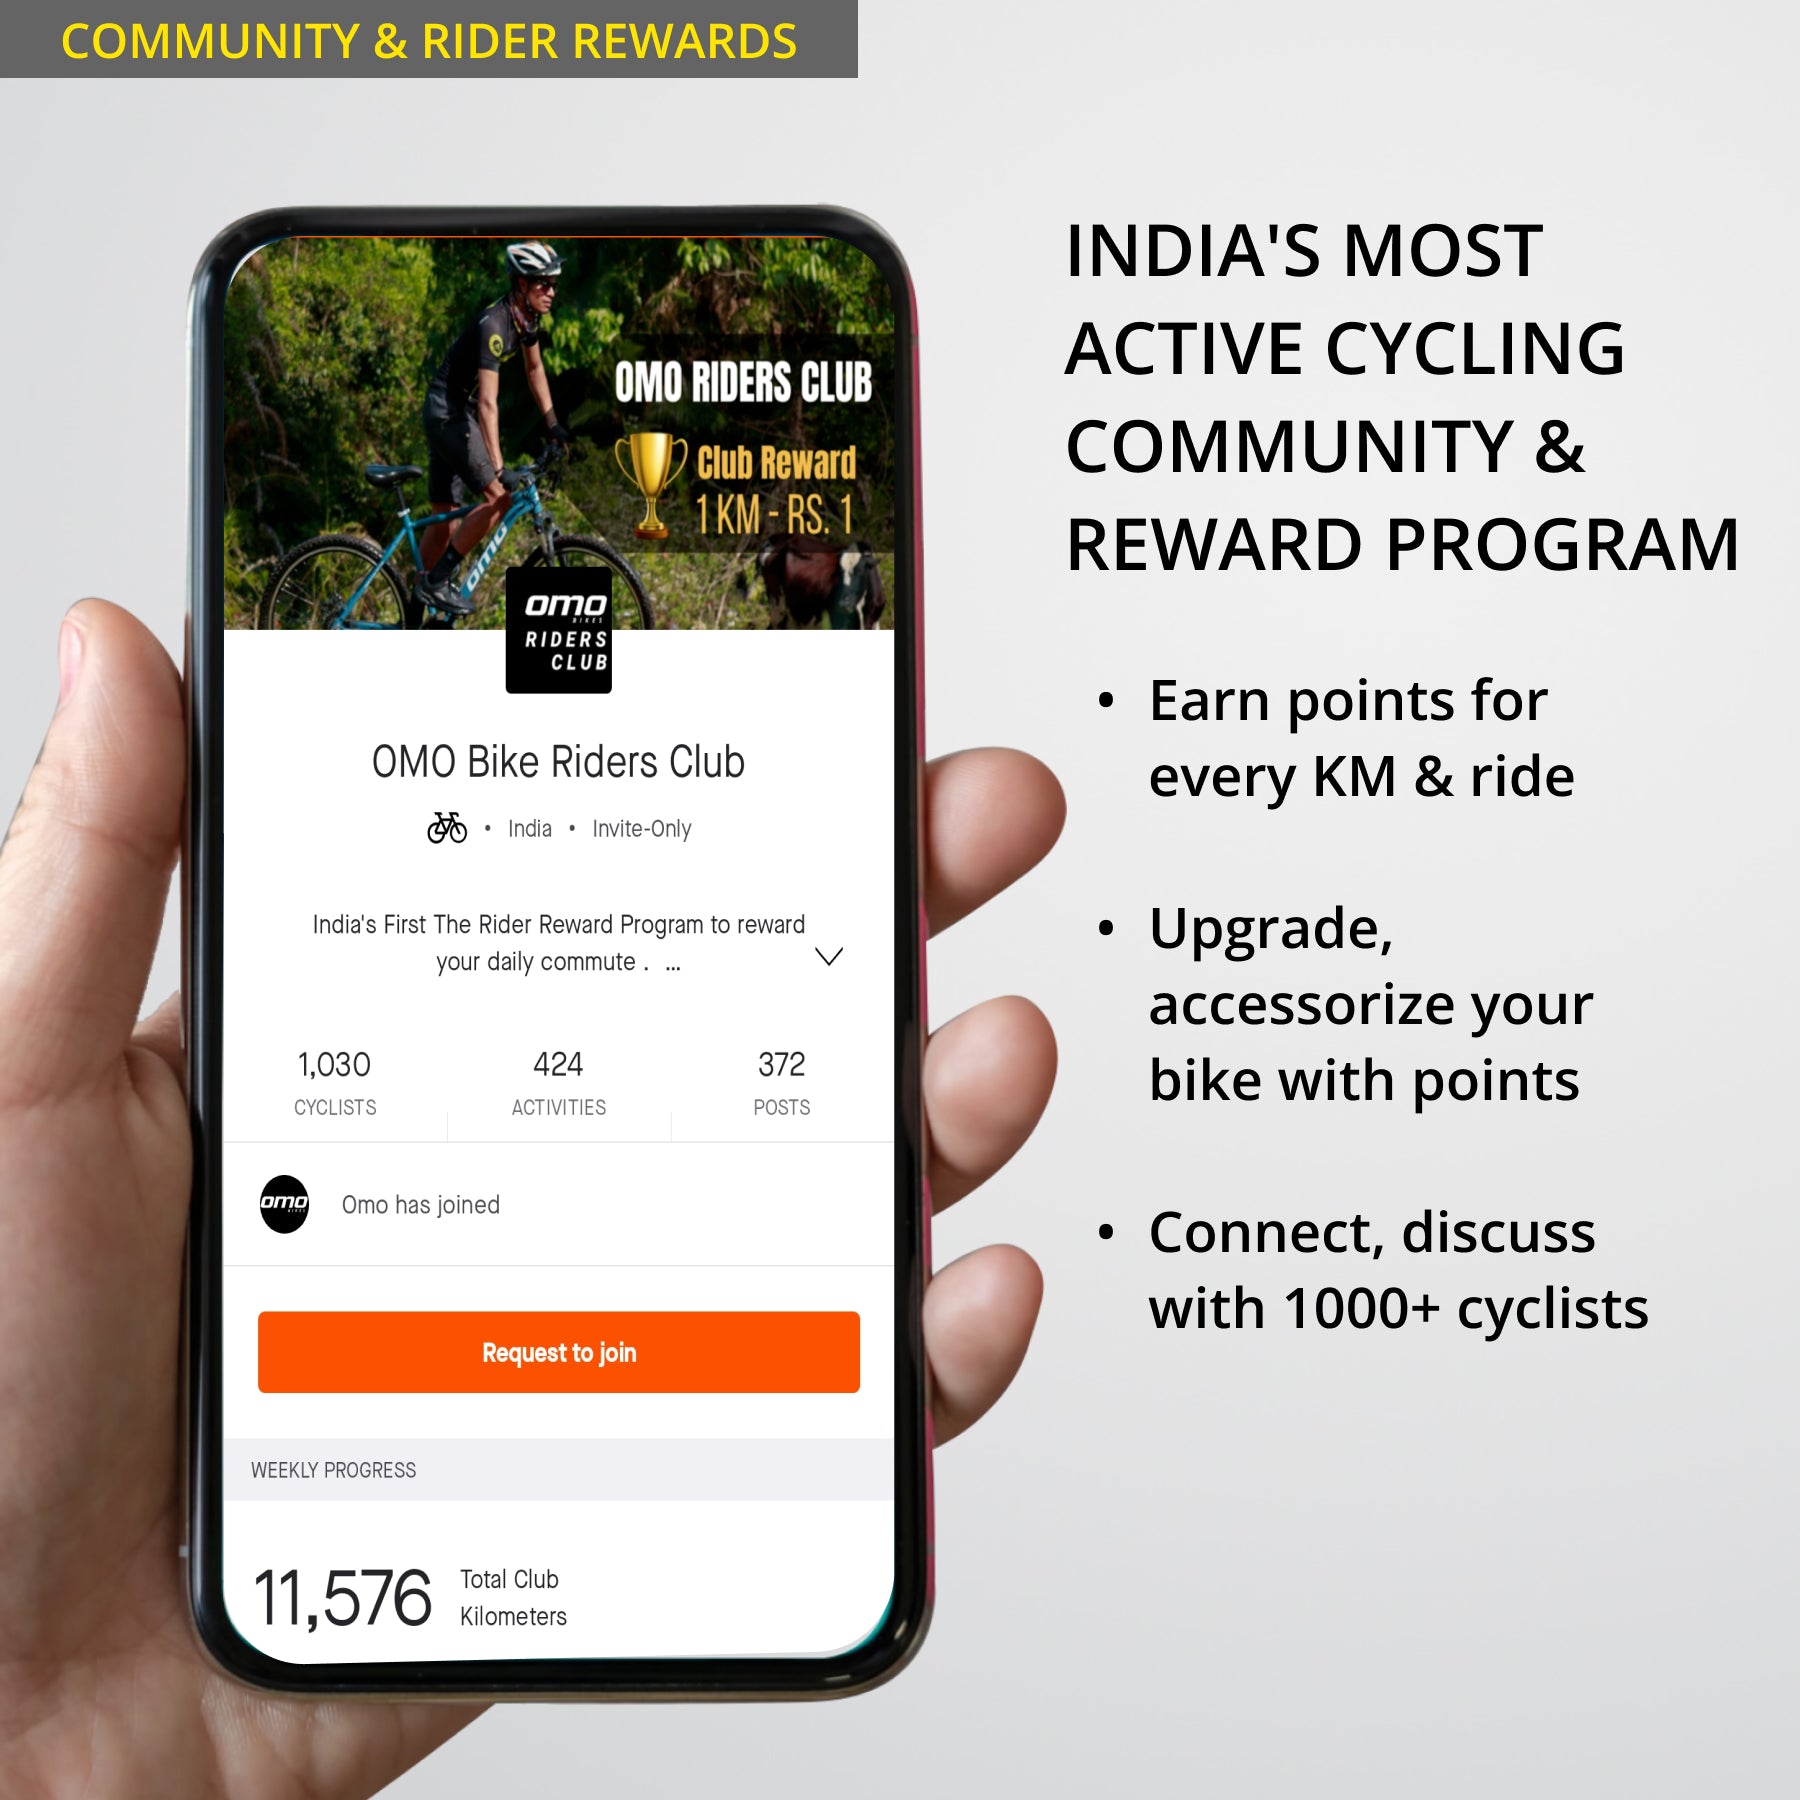 omobikes ladakh rider club india ride to win rewards to upgrade bike accessories